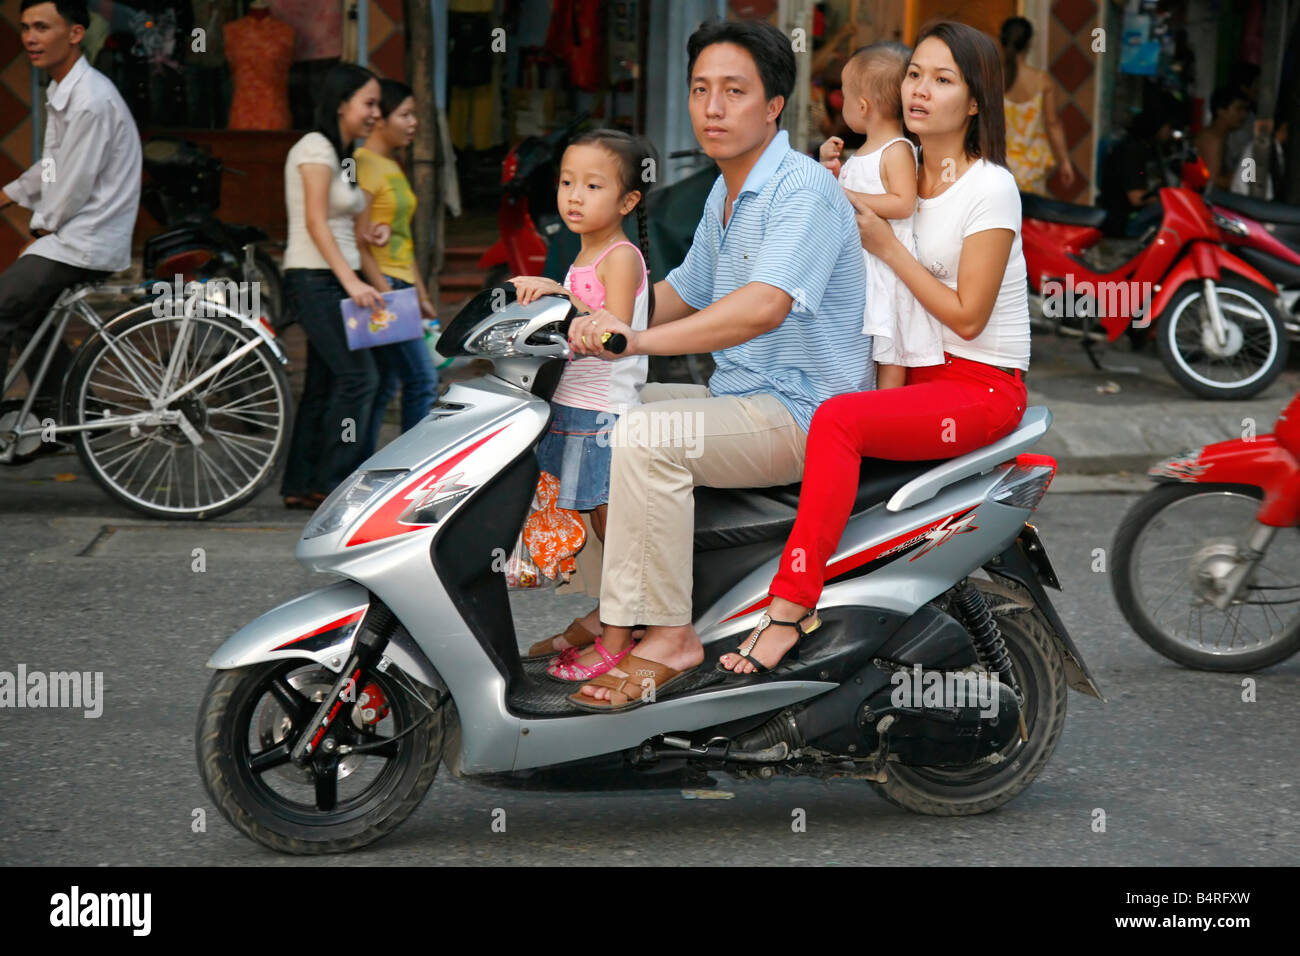 Family group on scooter, Hanoi North Vietnam Stock Photo